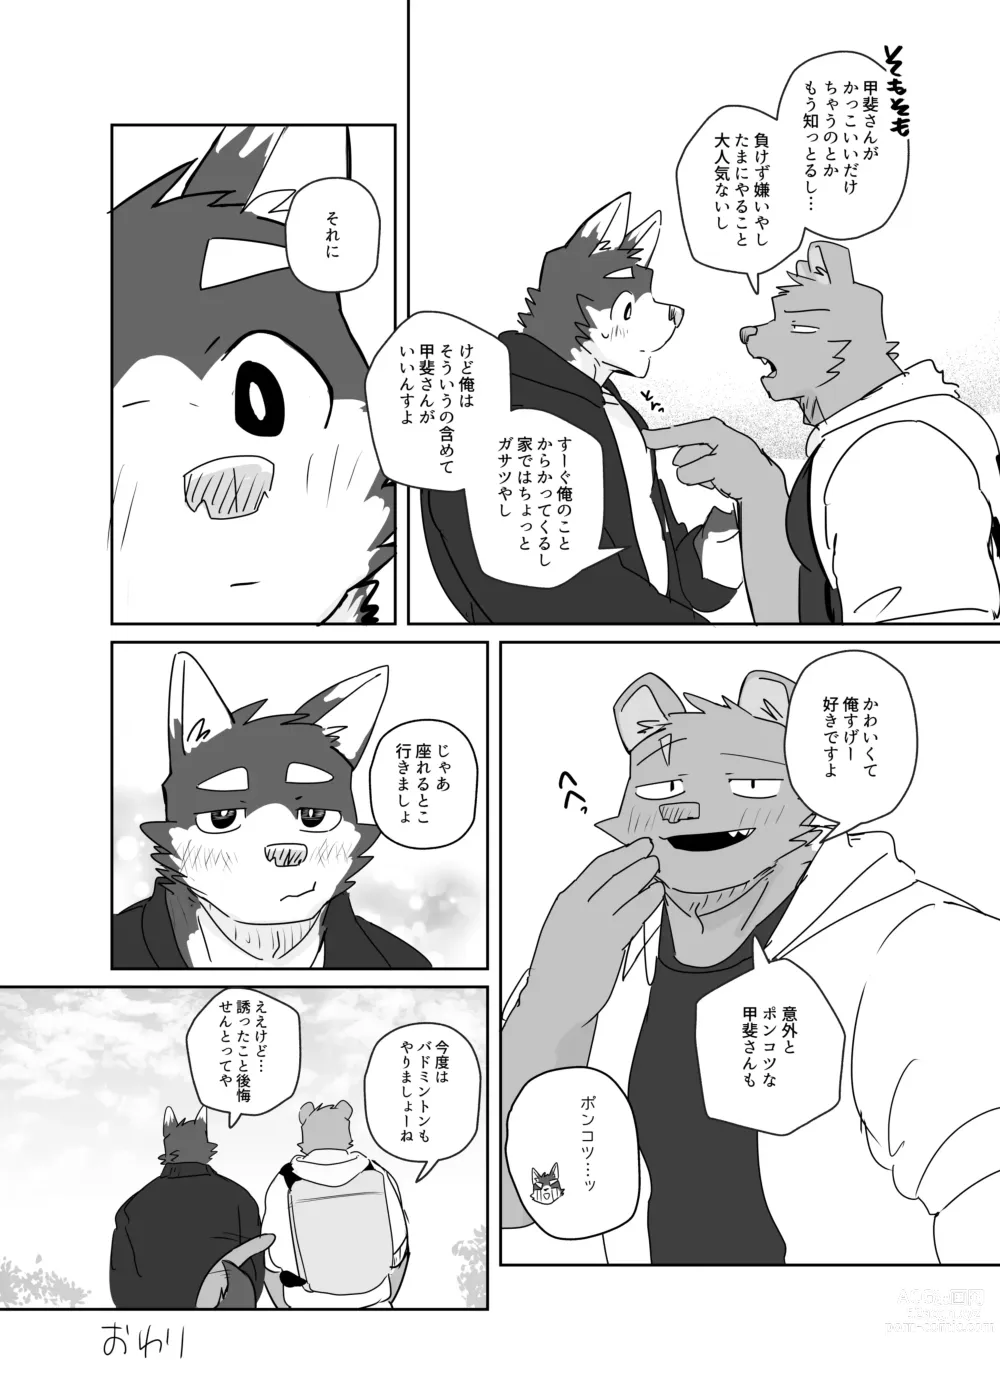 Page 9 of manga Frisbee